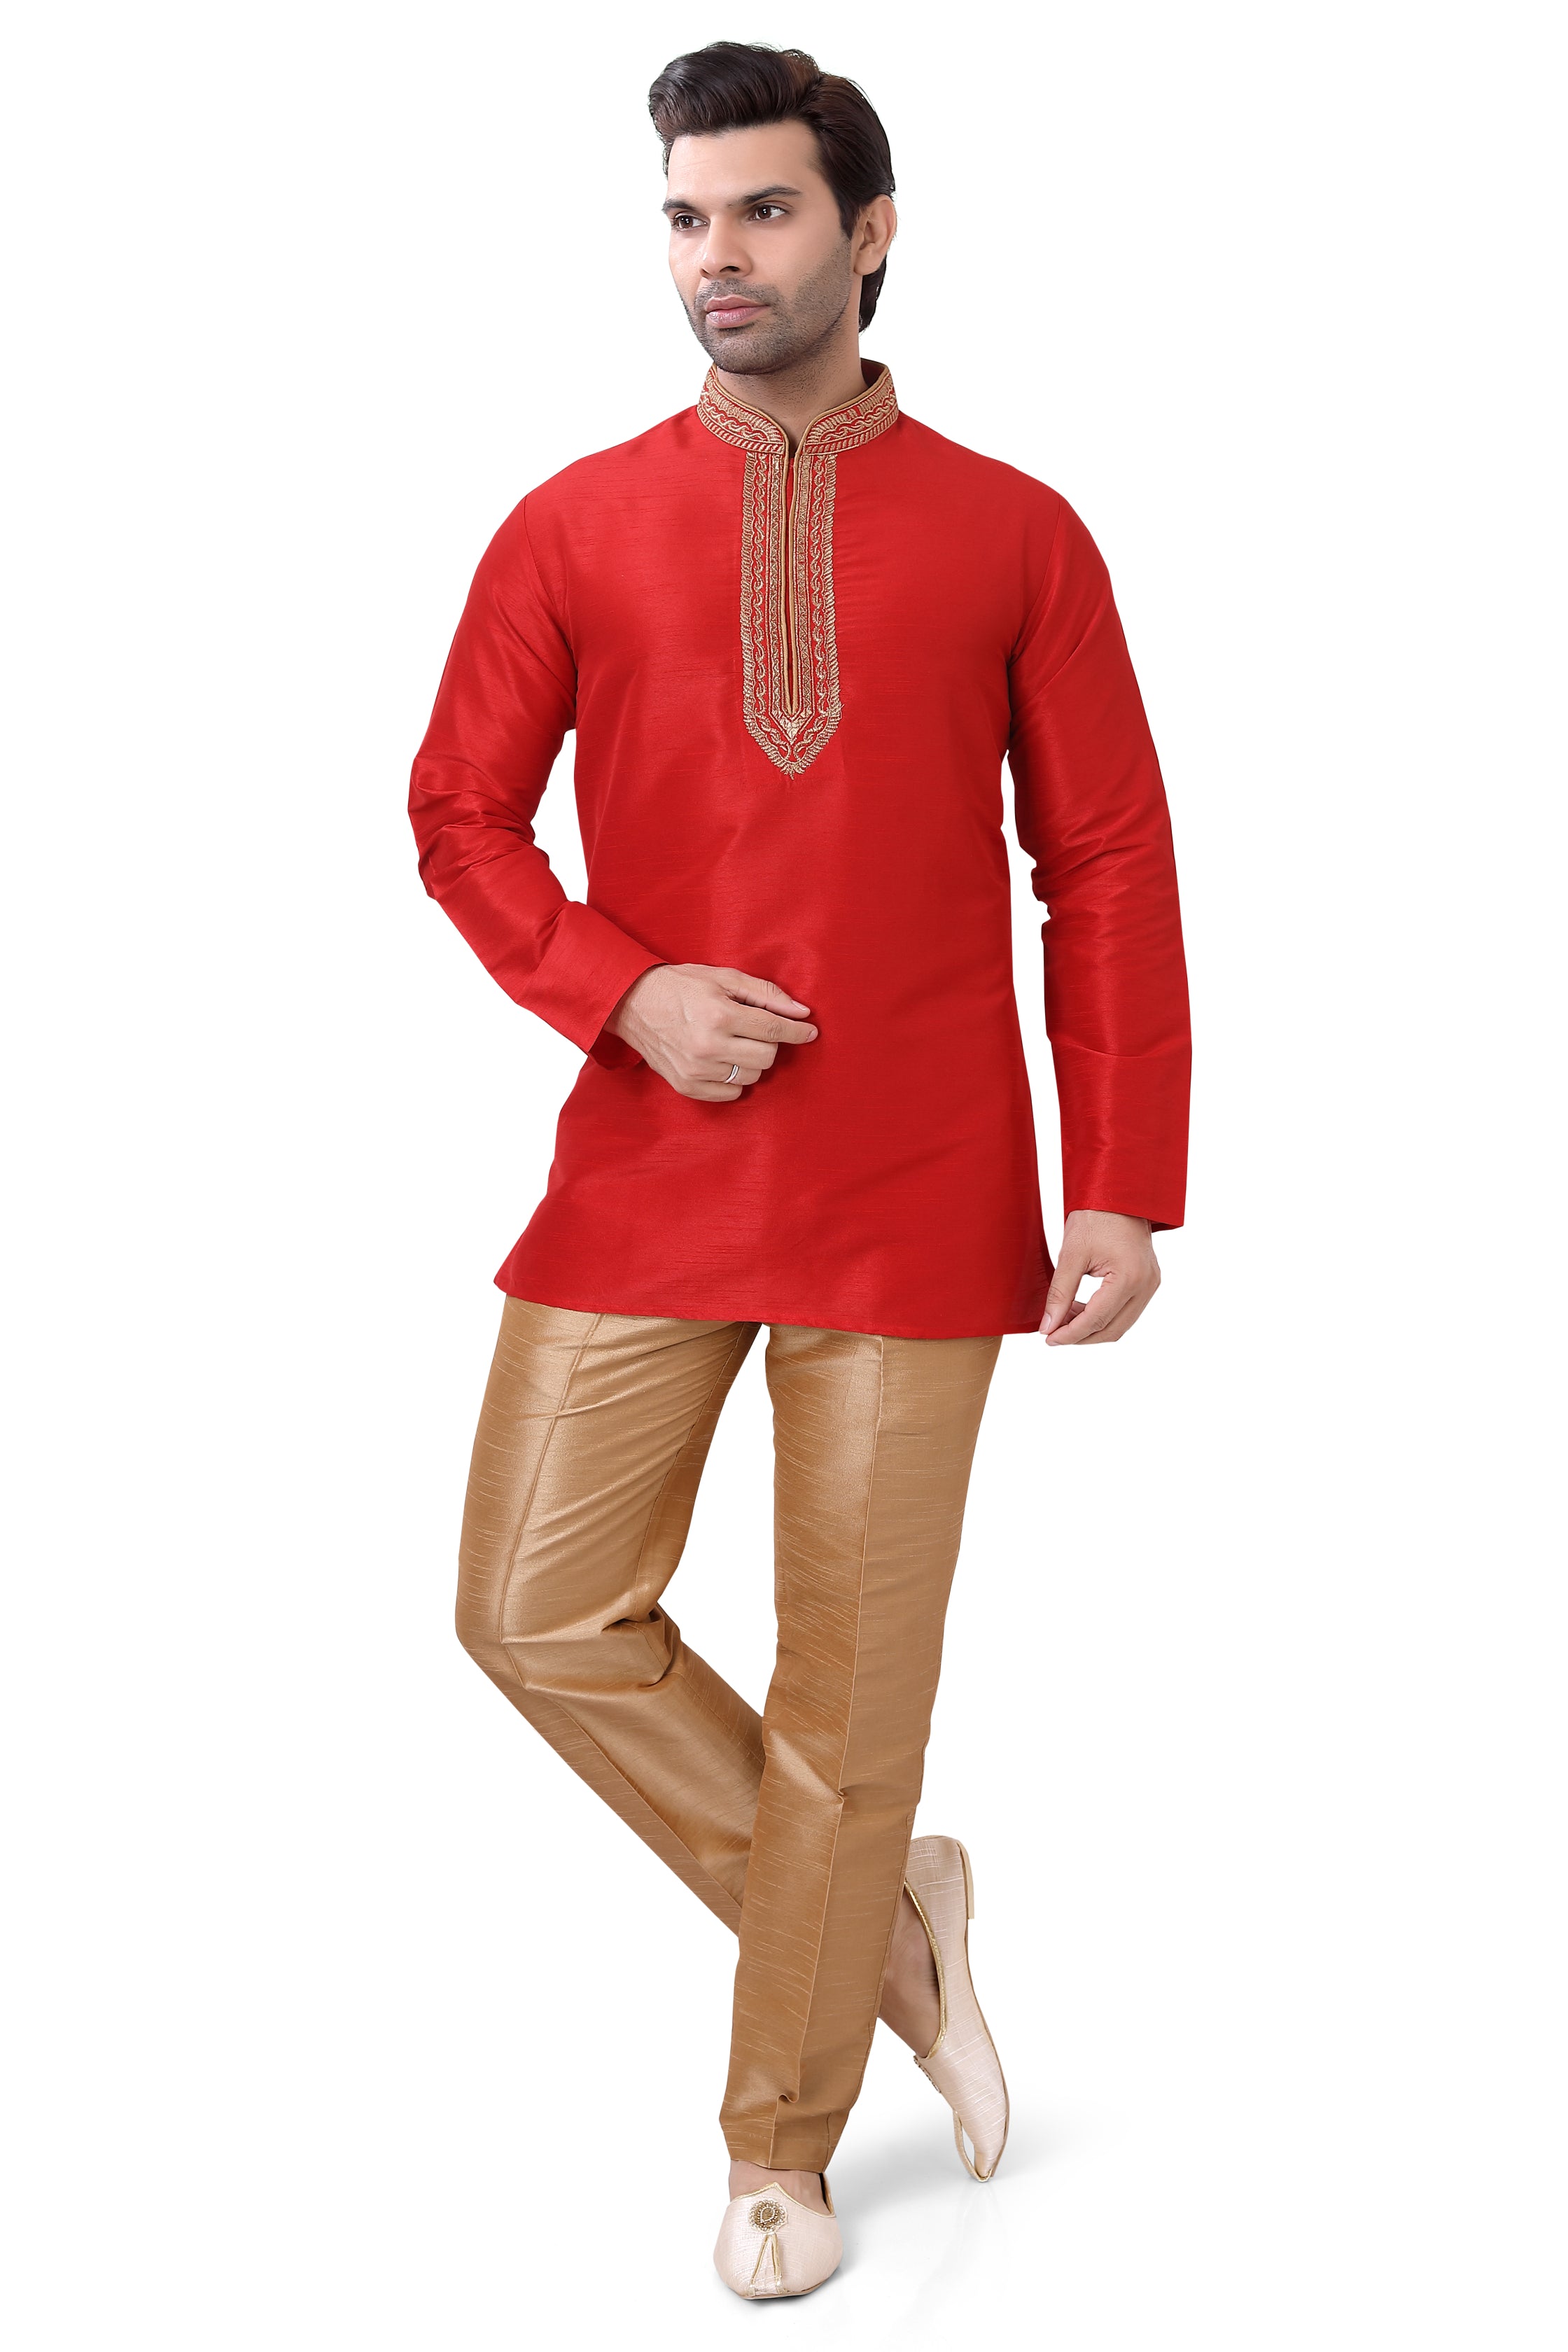 Banarasi Dupion Silk Short Kurta with embroidery in Red Color